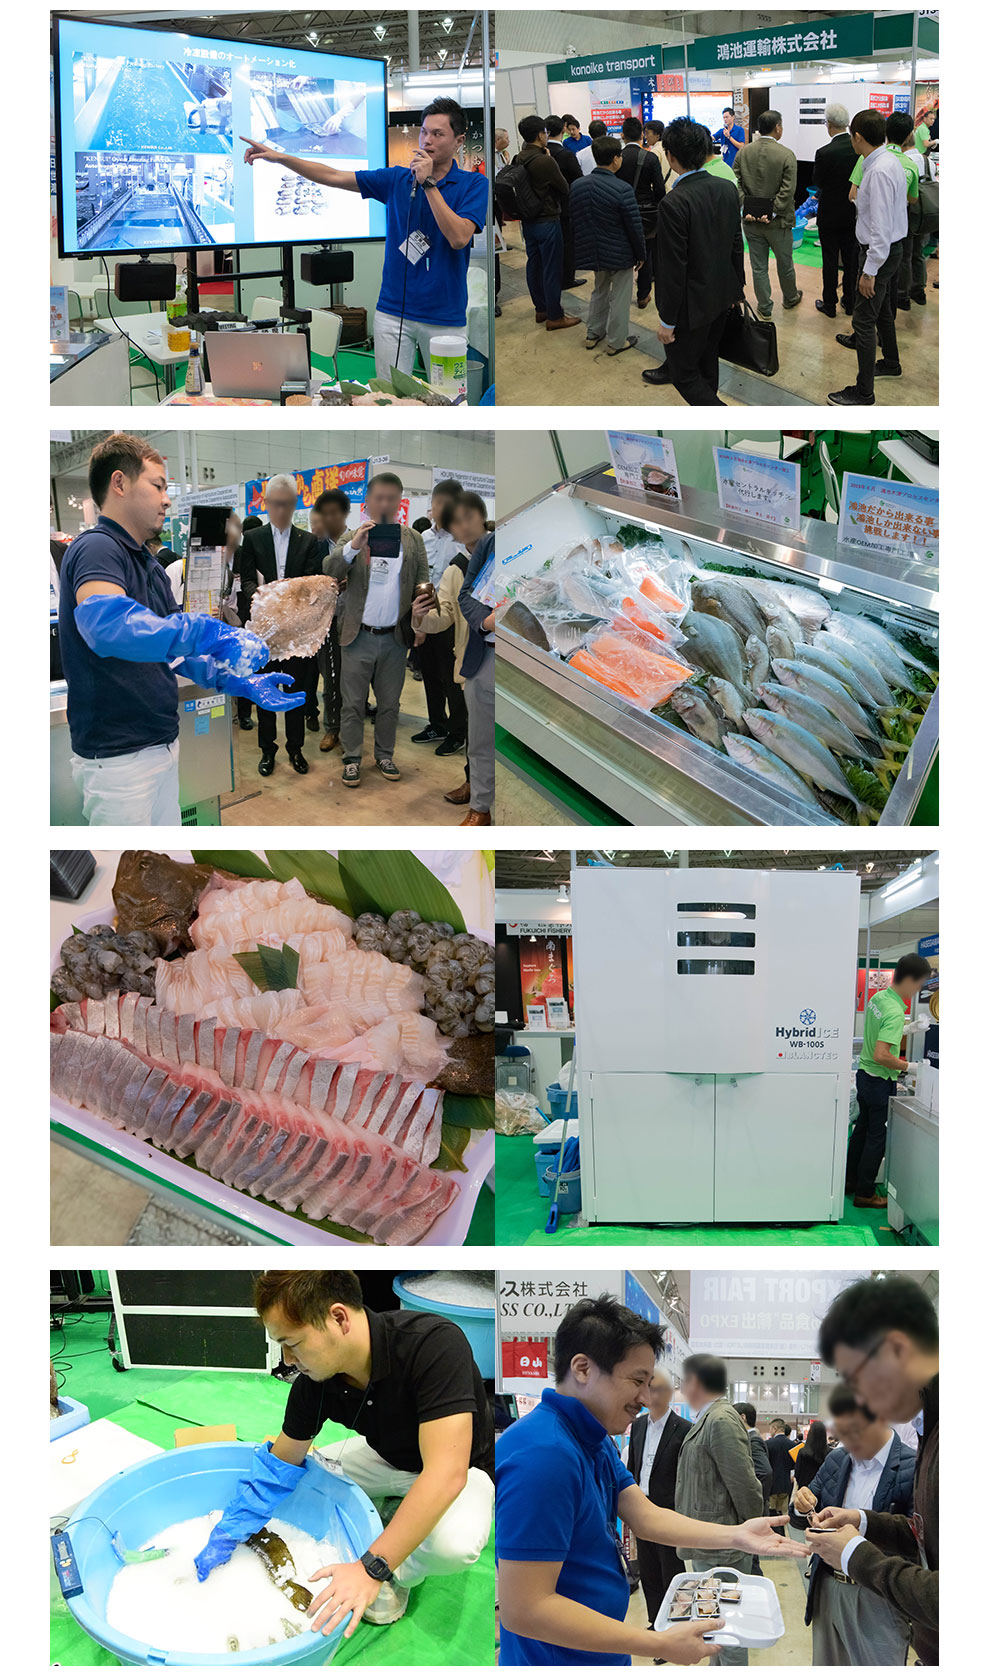 Japan's Food Export Fair